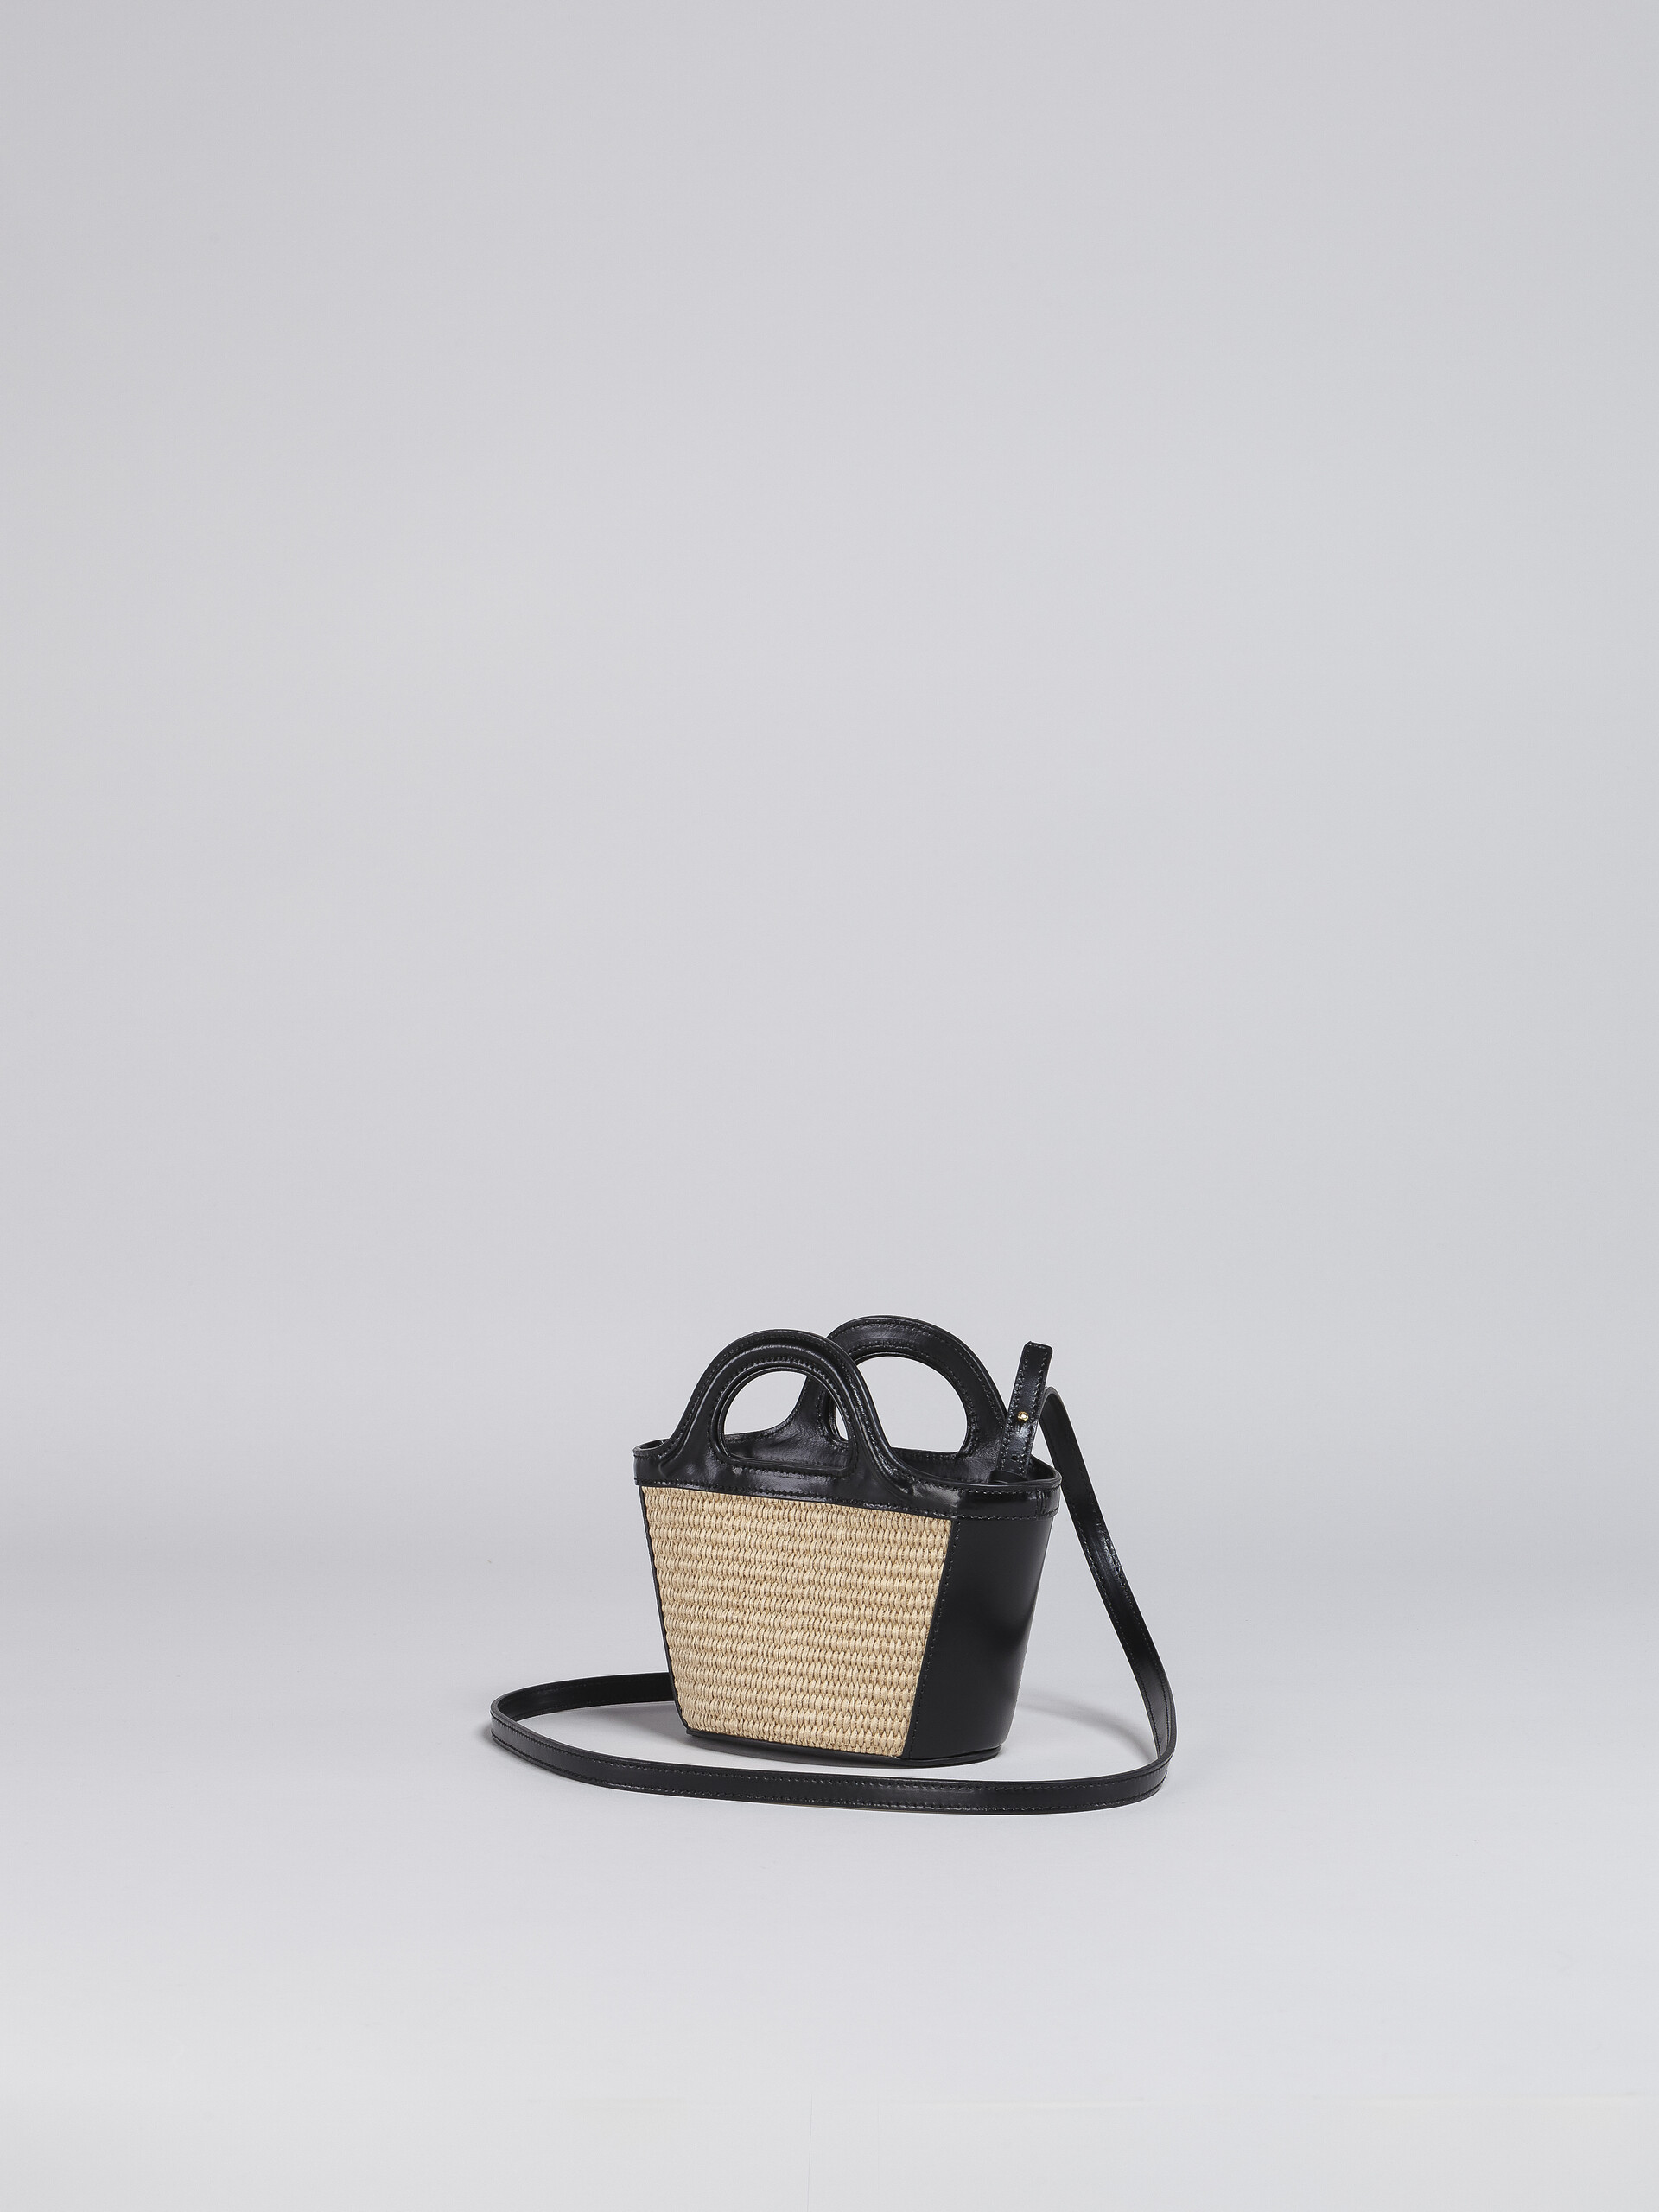 Black leather and raffia micro TROPICALIA SUMMER bag - Handbag - Image 3